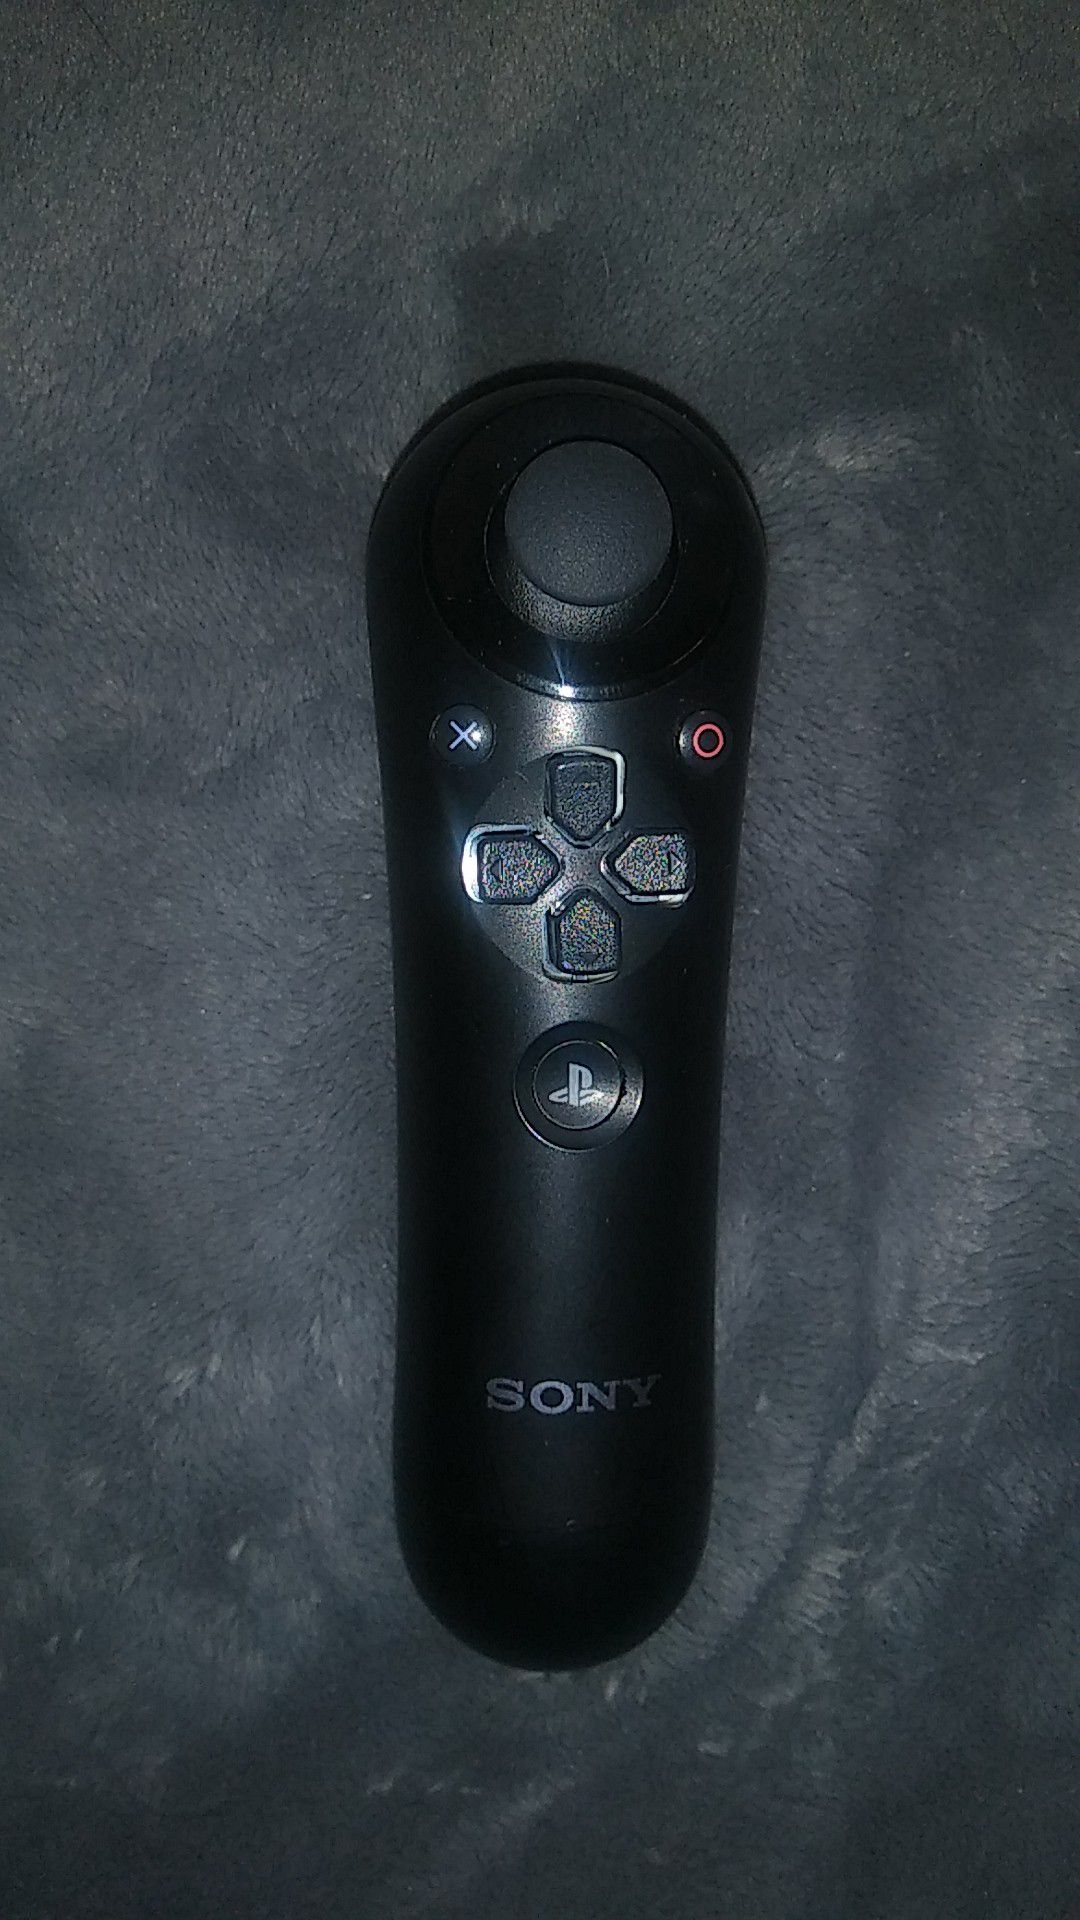 PlayStation navigation controller